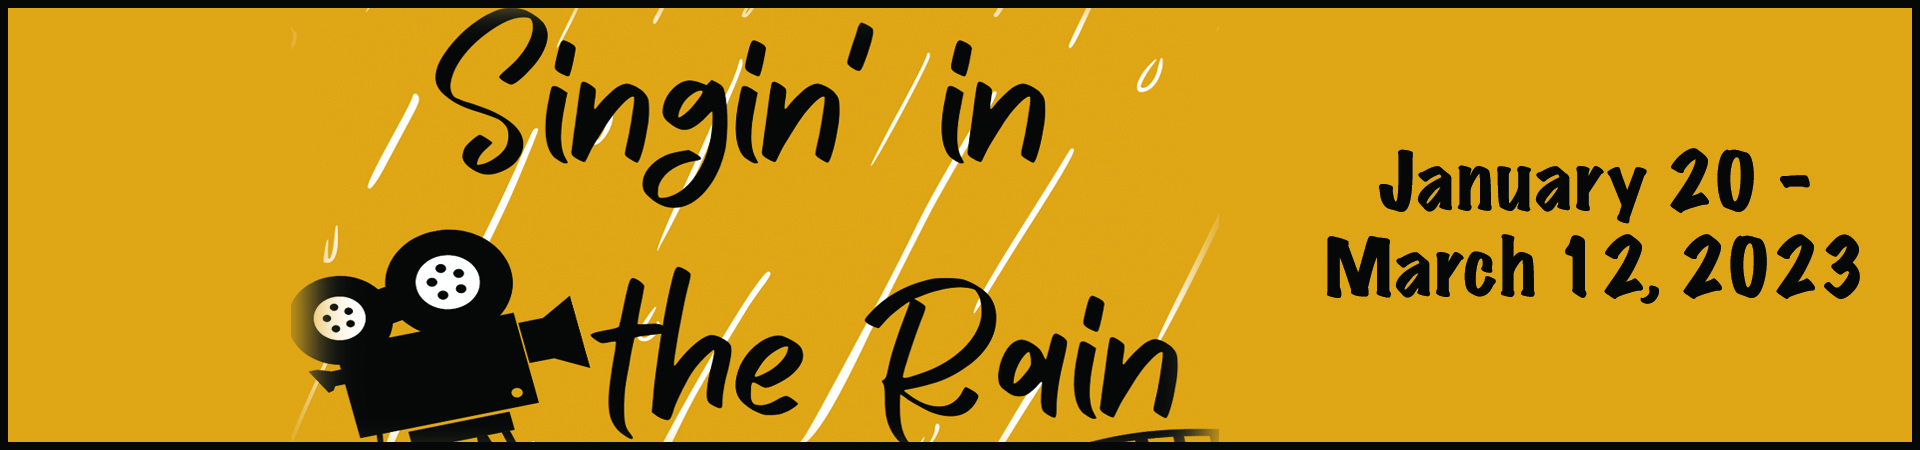 Singin’ In the Rain 2023